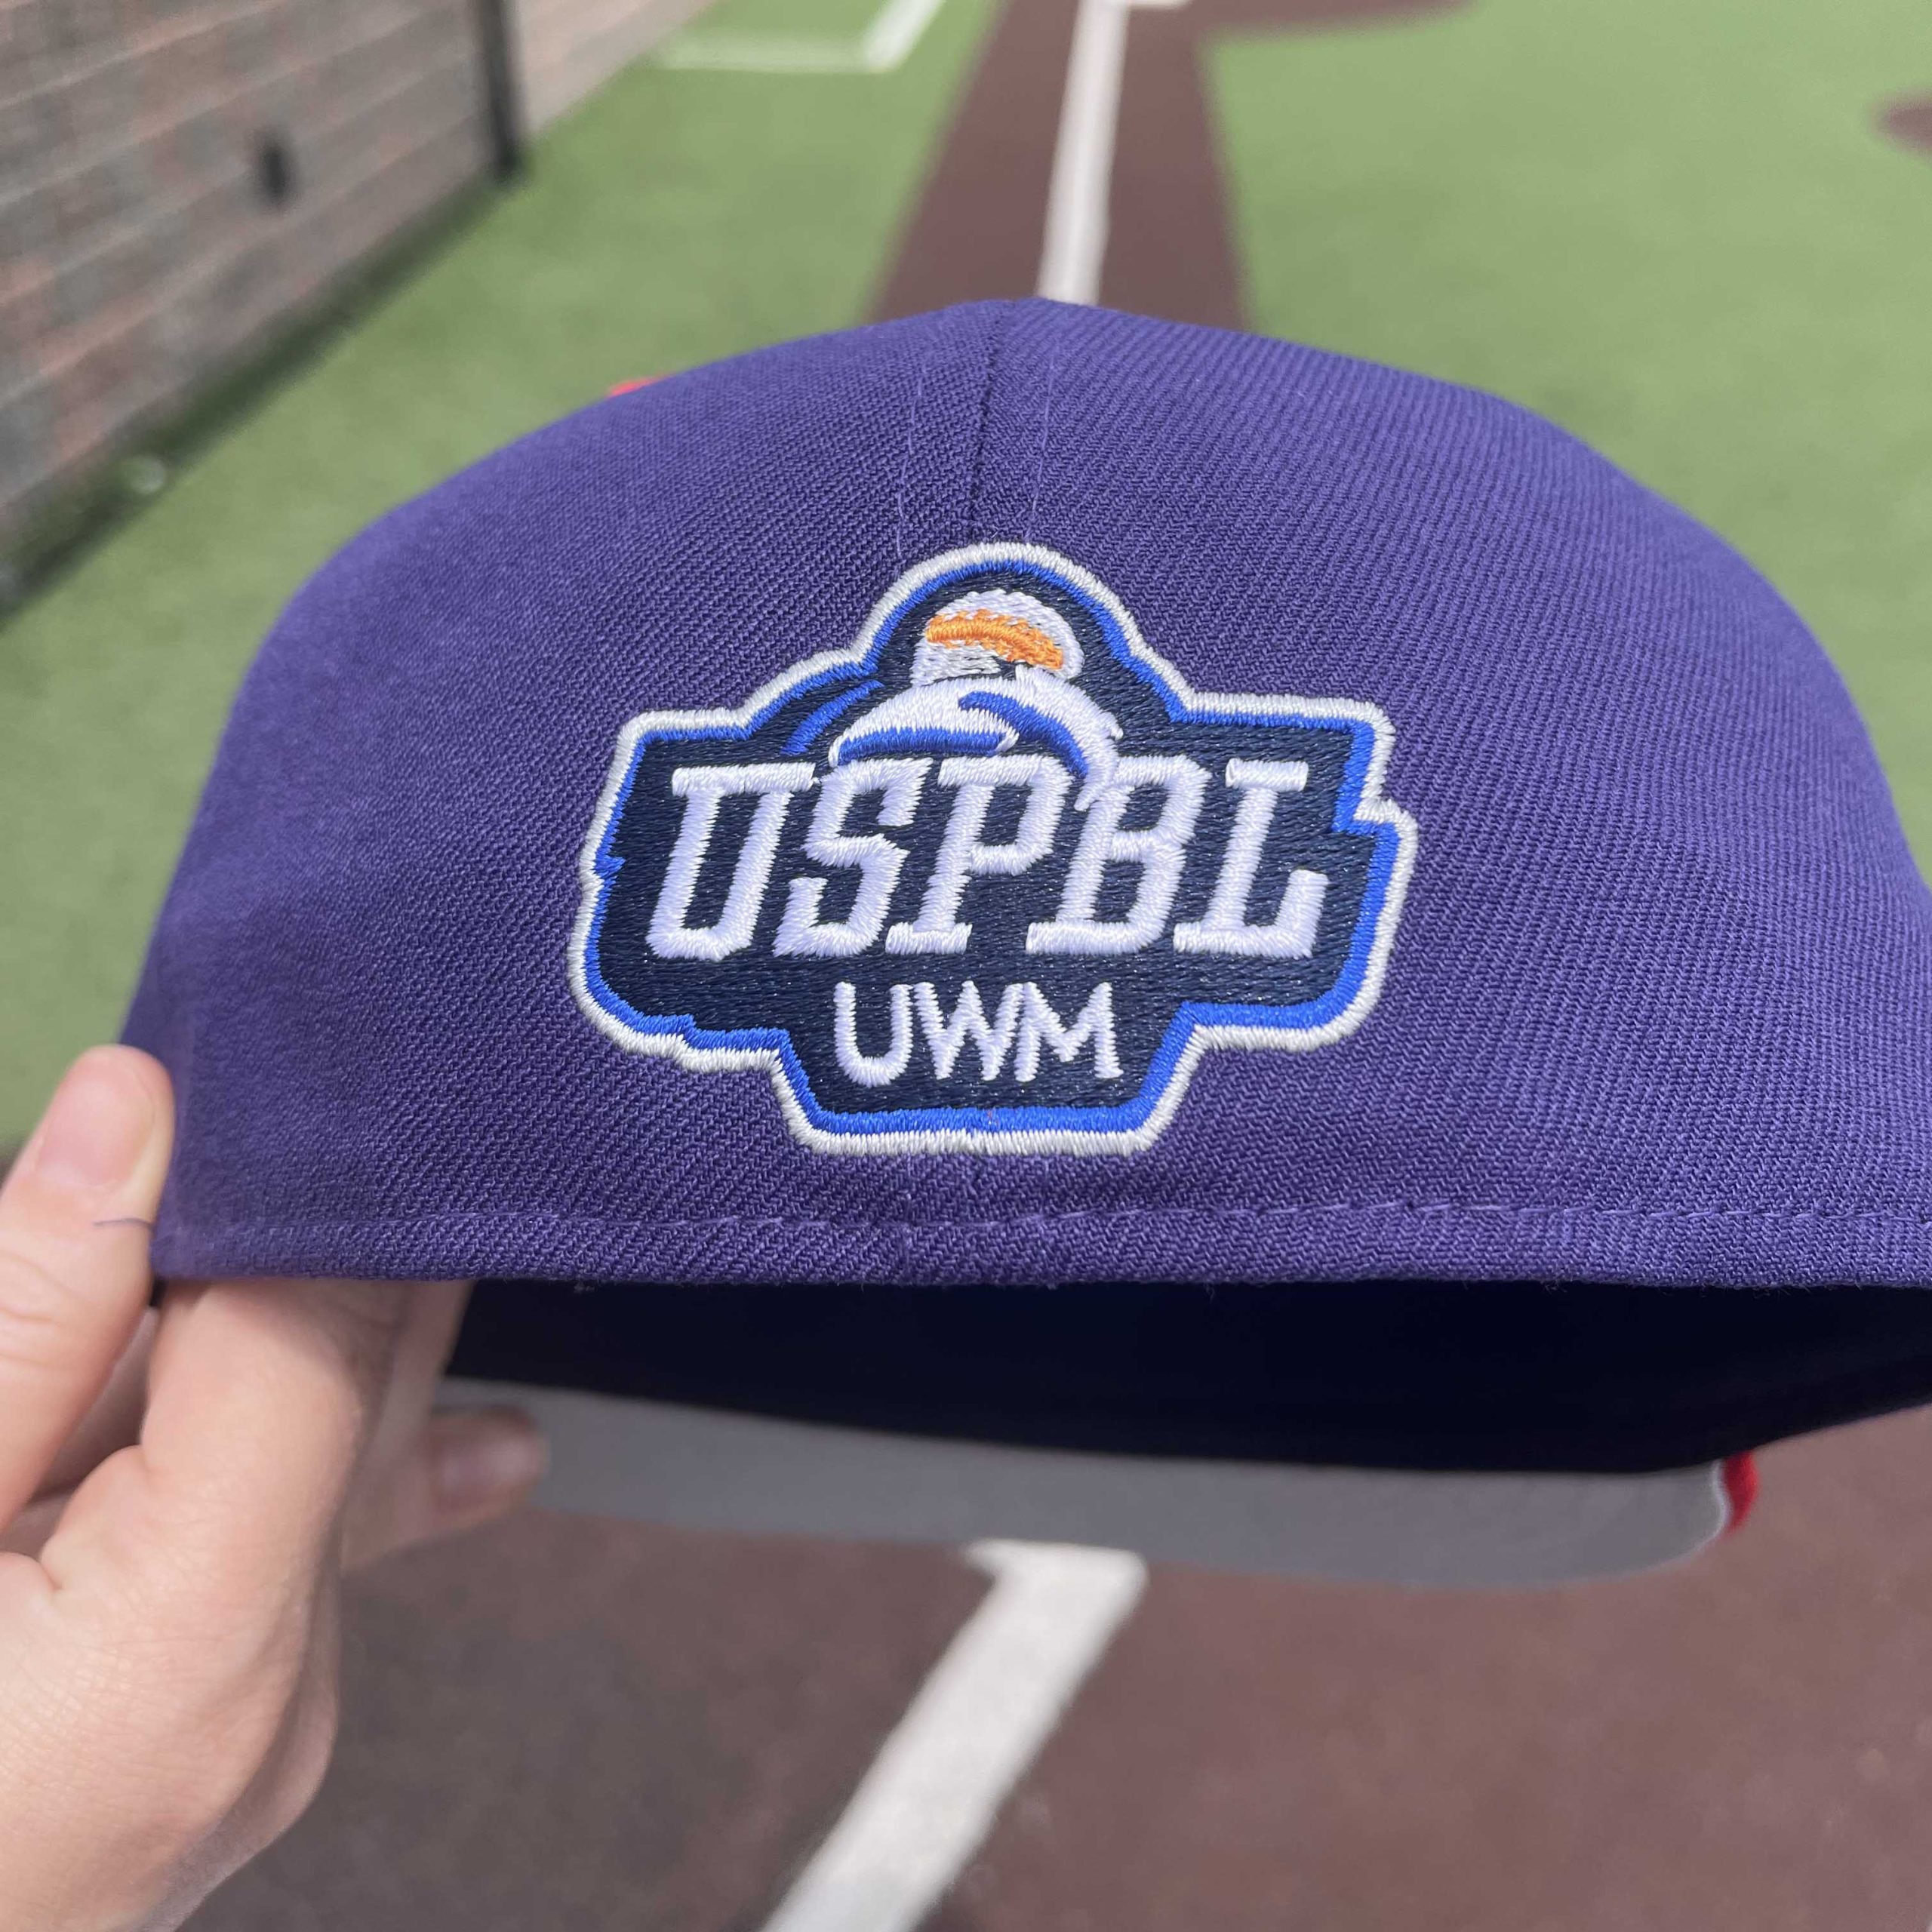 Unicorns New Era 59Fifty Home Hat - United Shore Professional Baseball  League (USPBL)